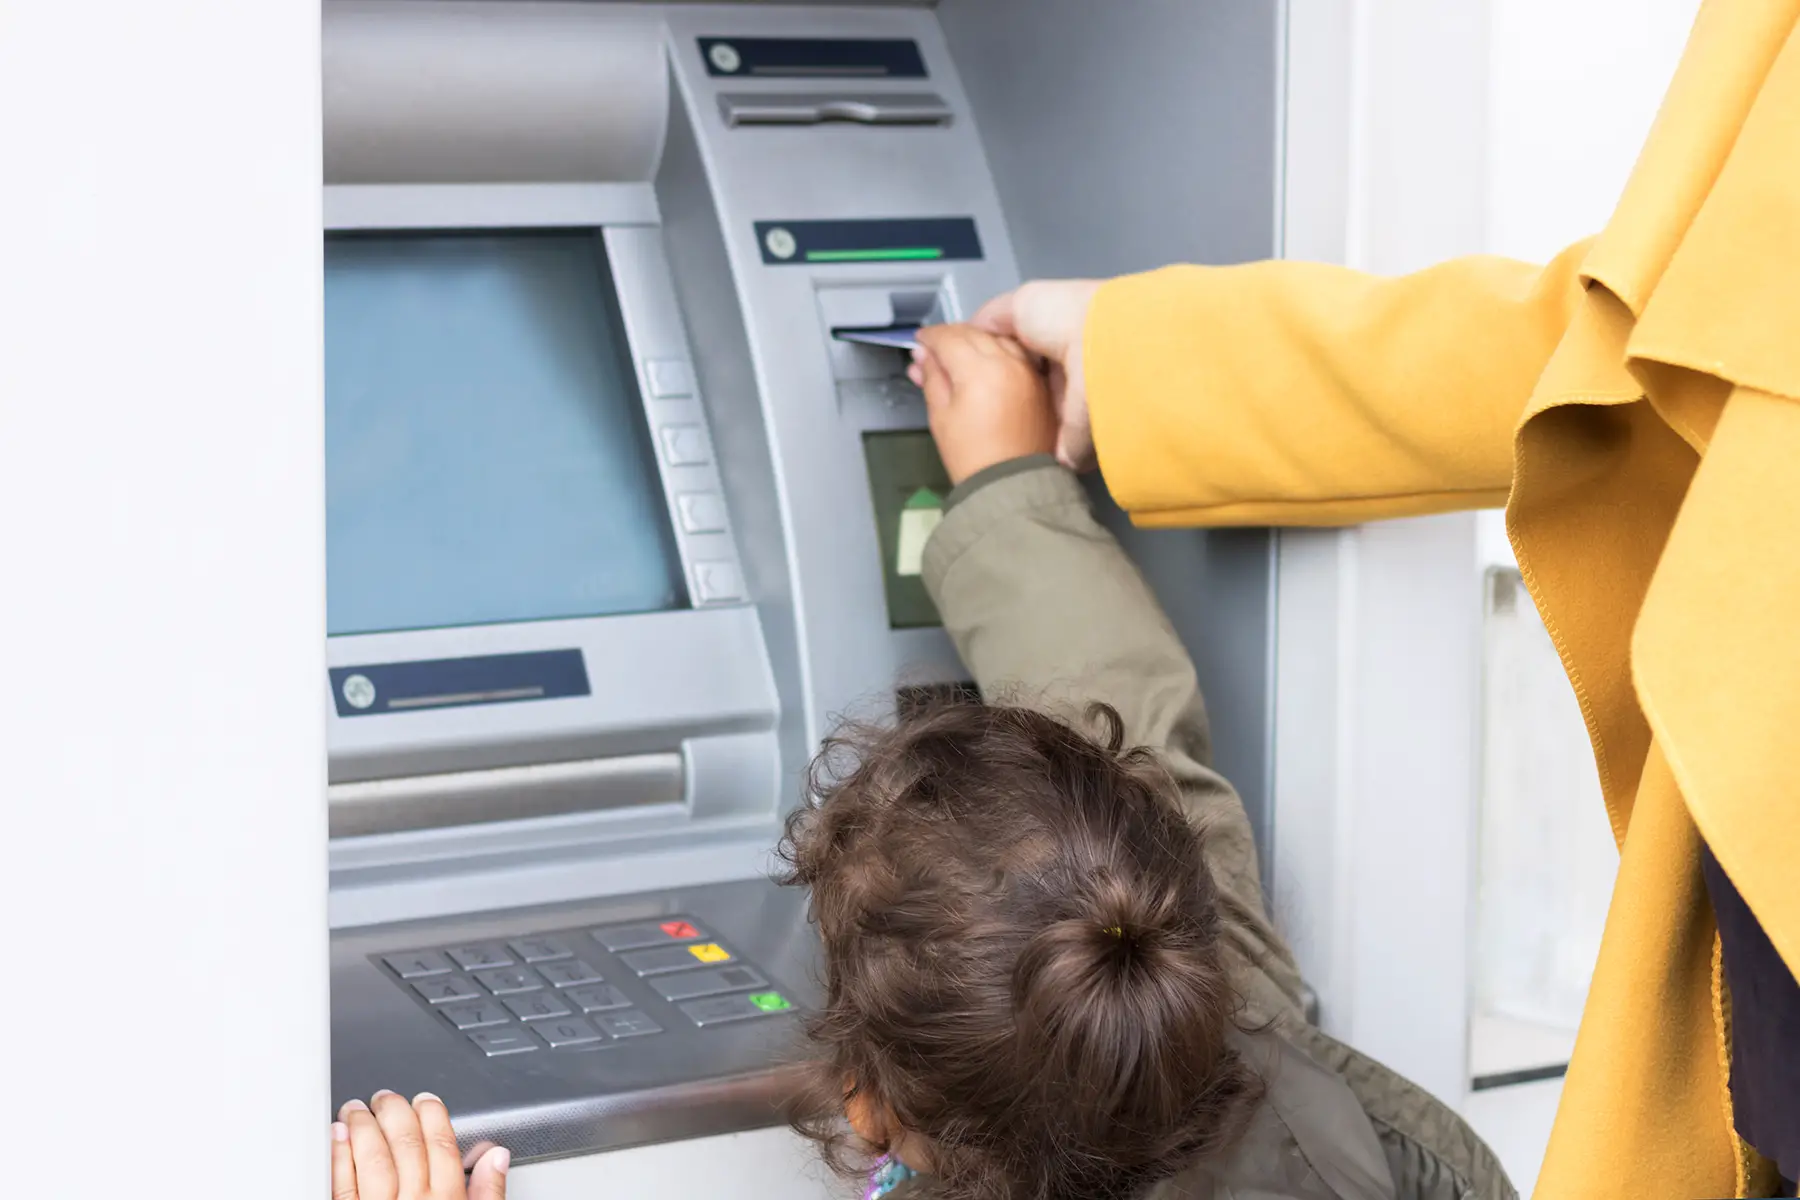 Child using ATM